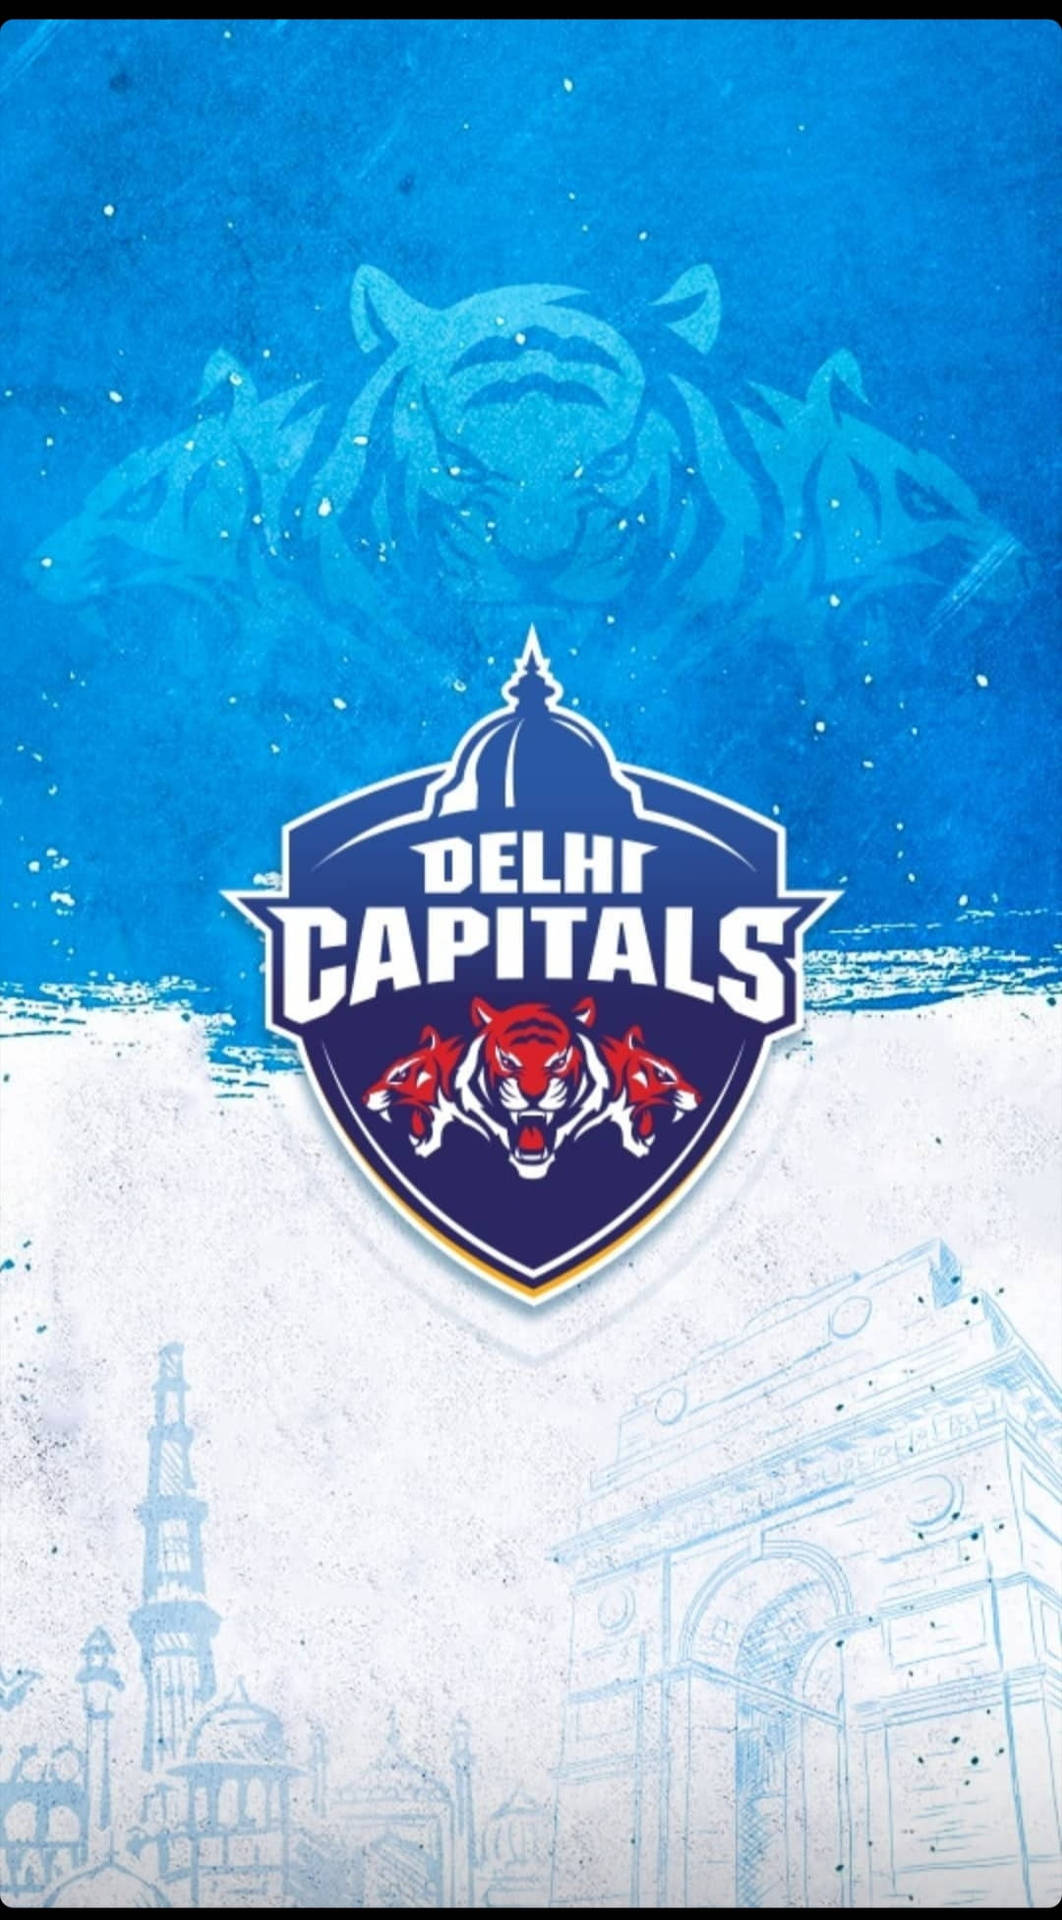 Delhi Capitals Logo Kunst Tapet: Se Delhi Capitals logo udtrykt i kunstneriske virkemidler på det smukke tapet. Wallpaper